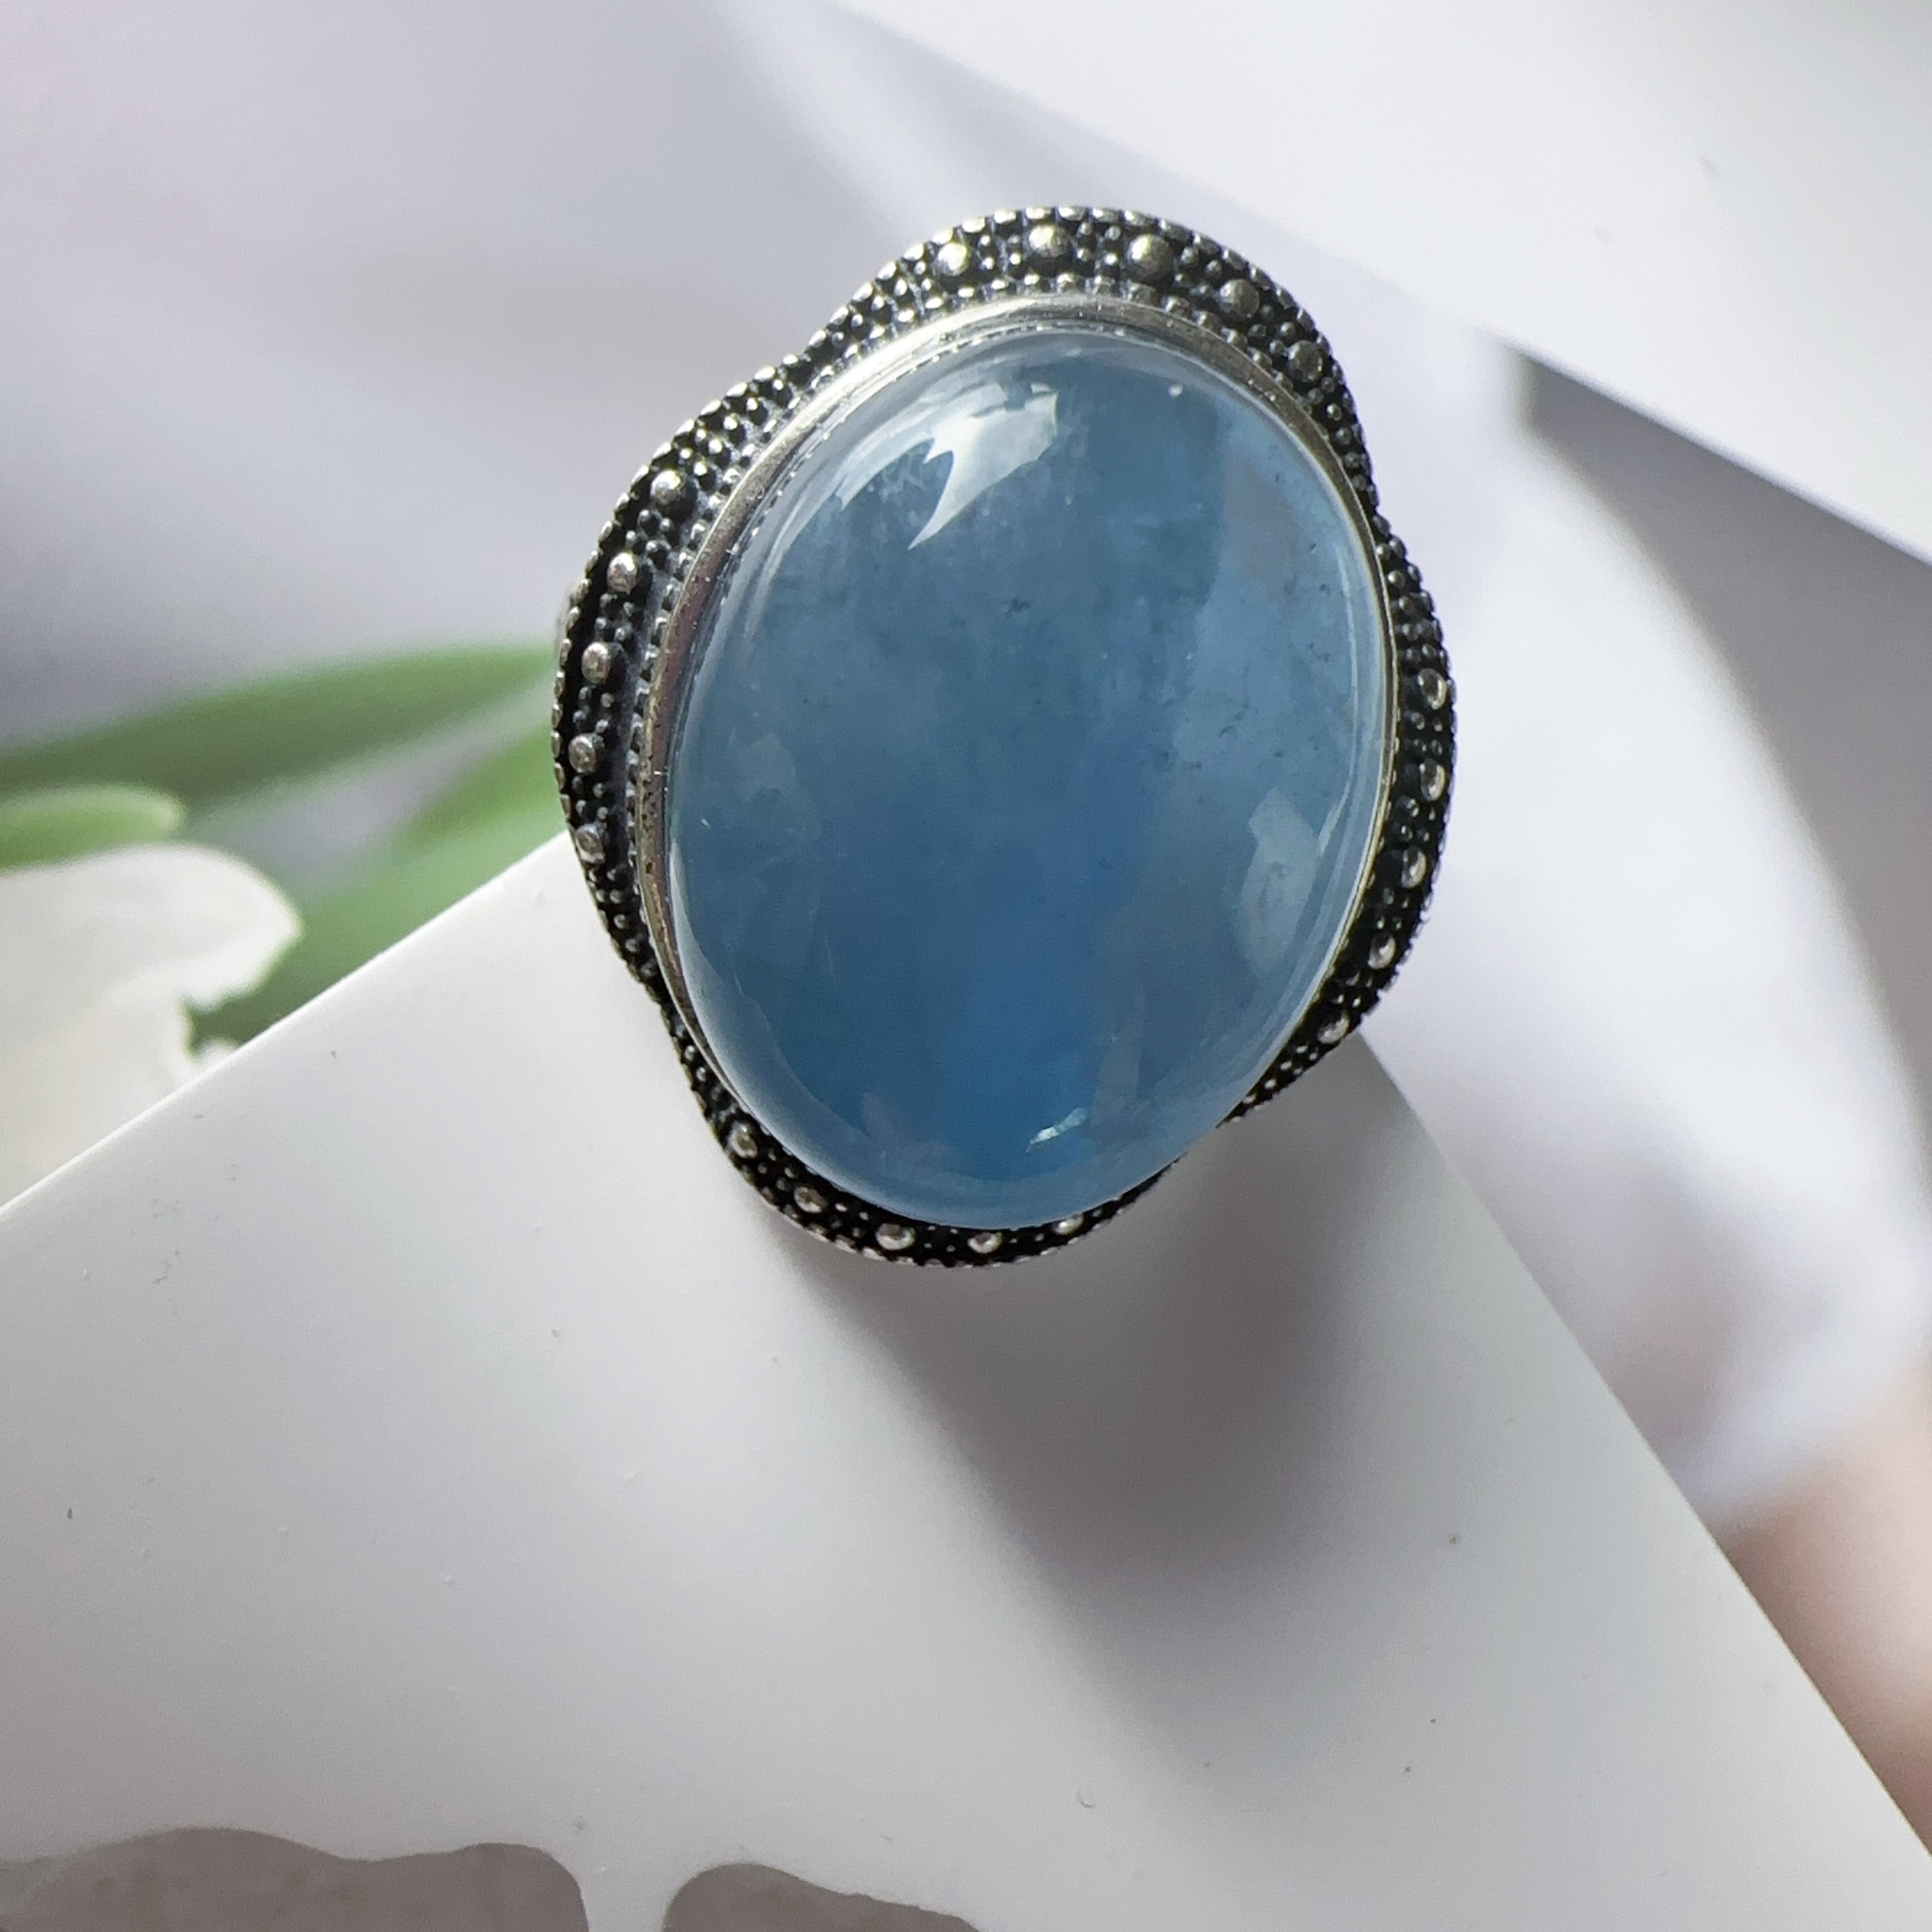 S925 Aquamarine Ring (Deep Ocean Blue XXL) Adjustable Ring Size ★WYSIWYG★